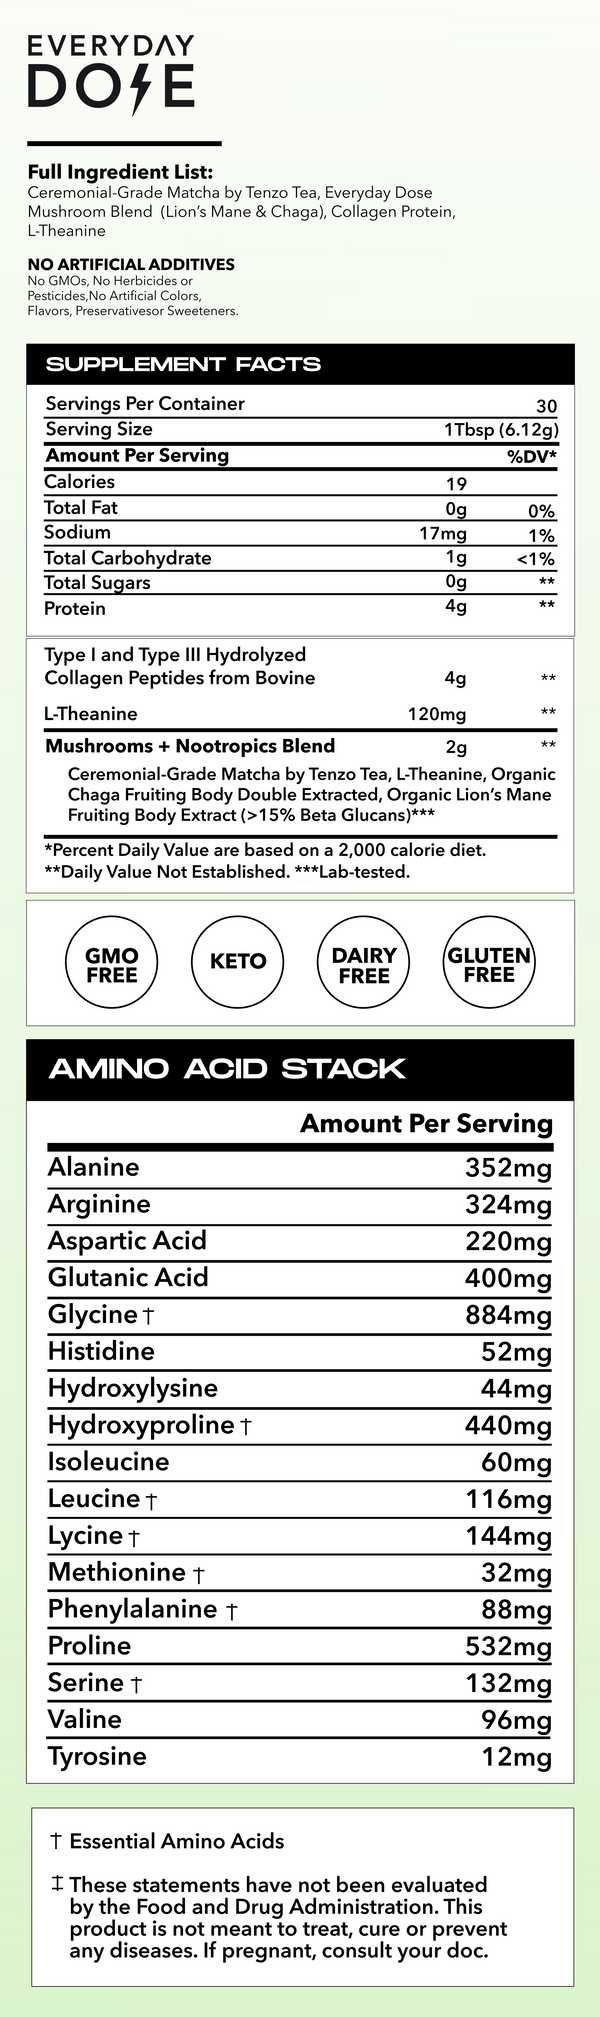 Mushroom Matcha Drink Mix + Free Starter Kit - Everyday Dose